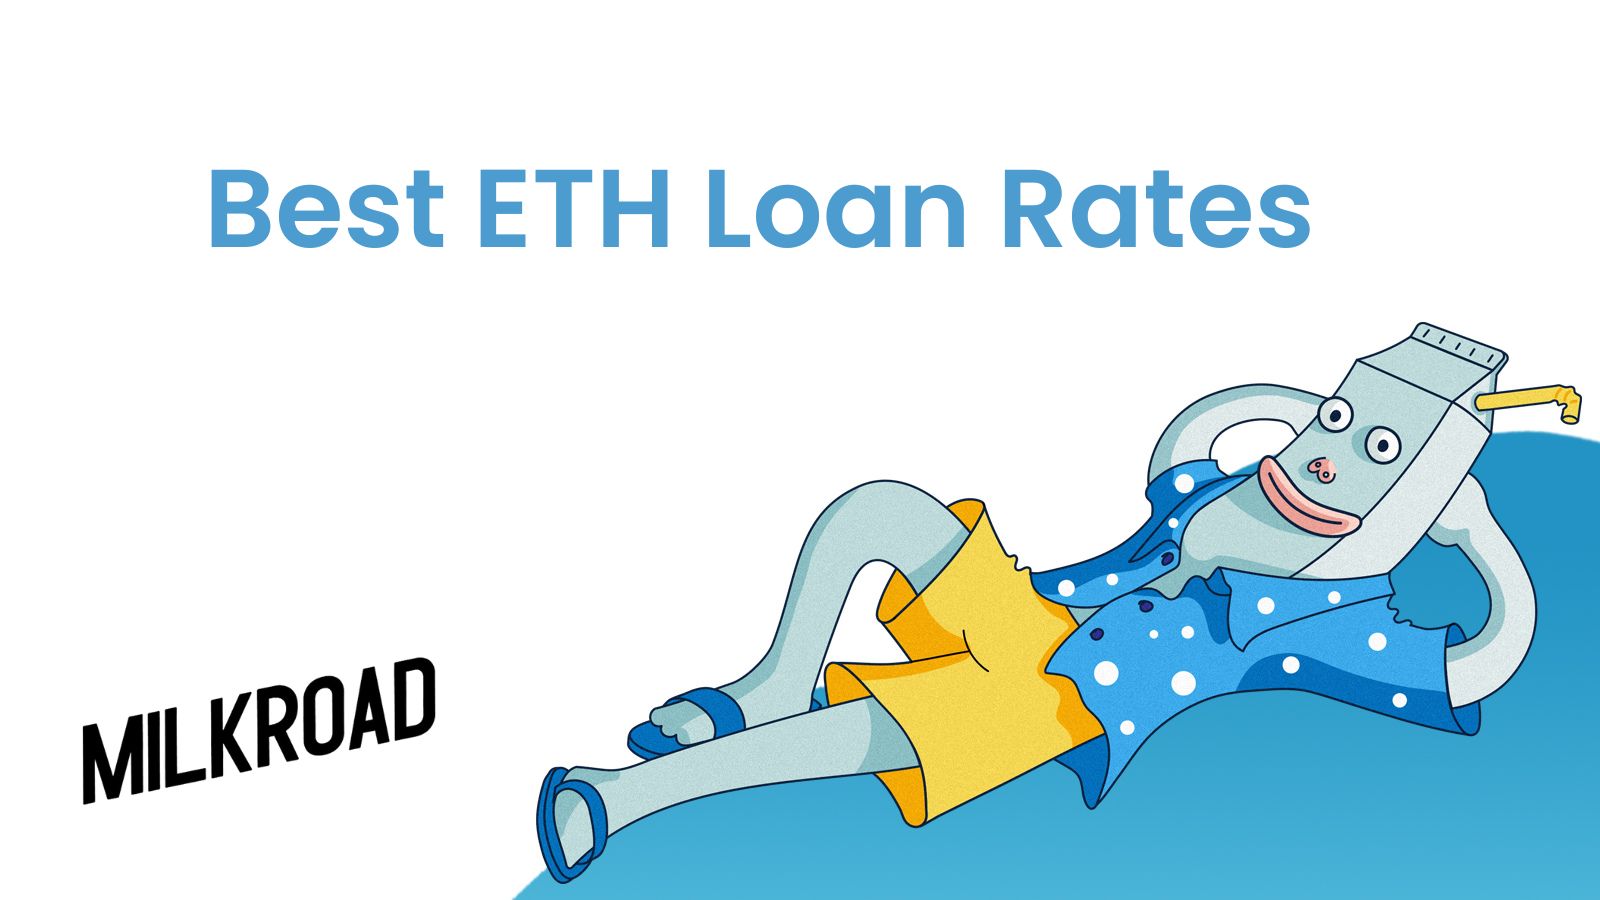 Best ETH Loan Rates